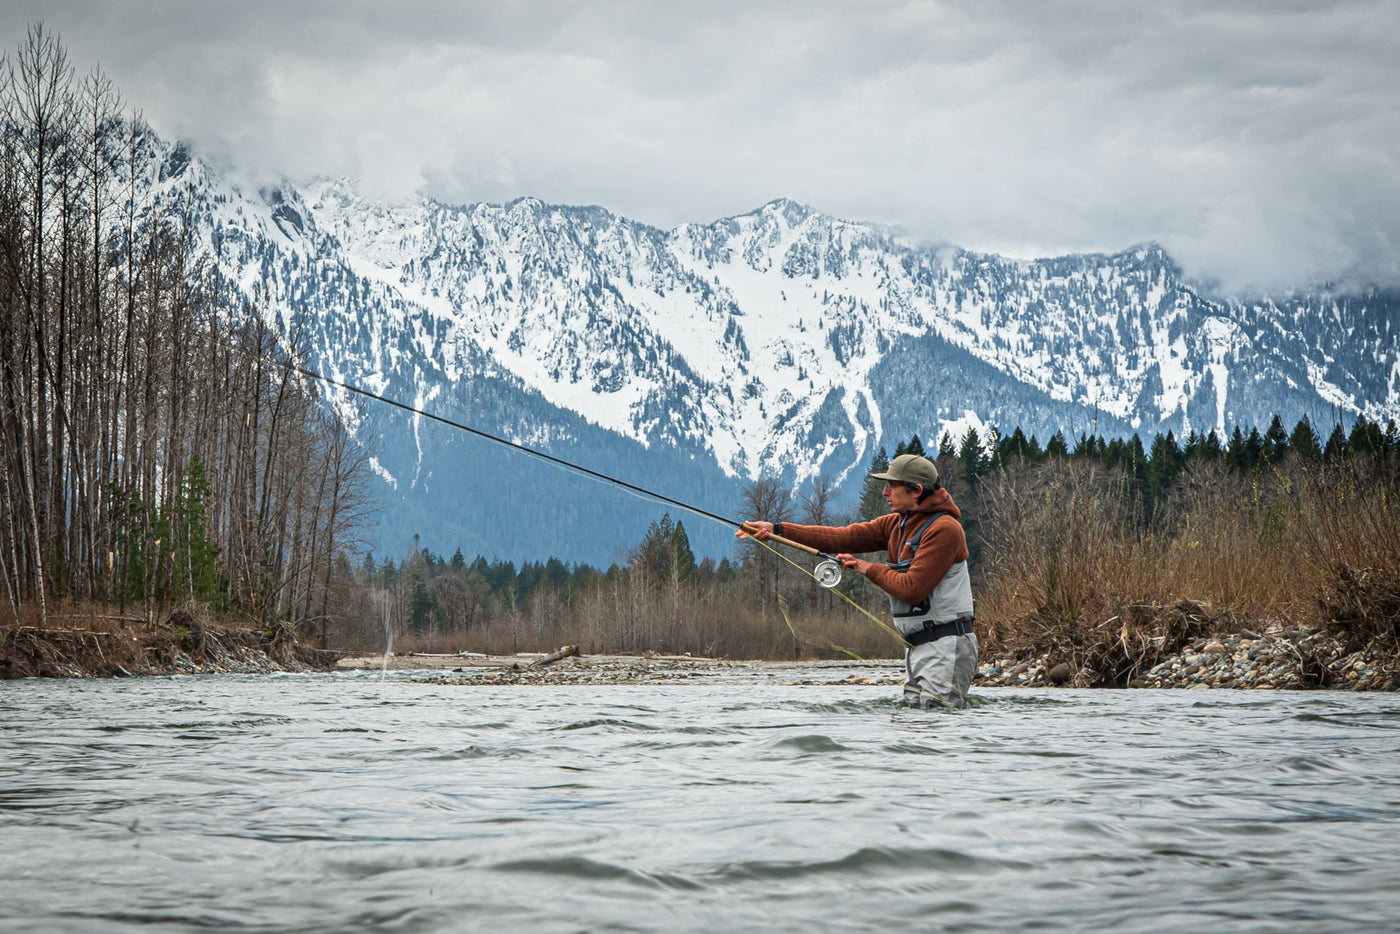 Sauk River Fly Fishing For Salmon, Steelhead